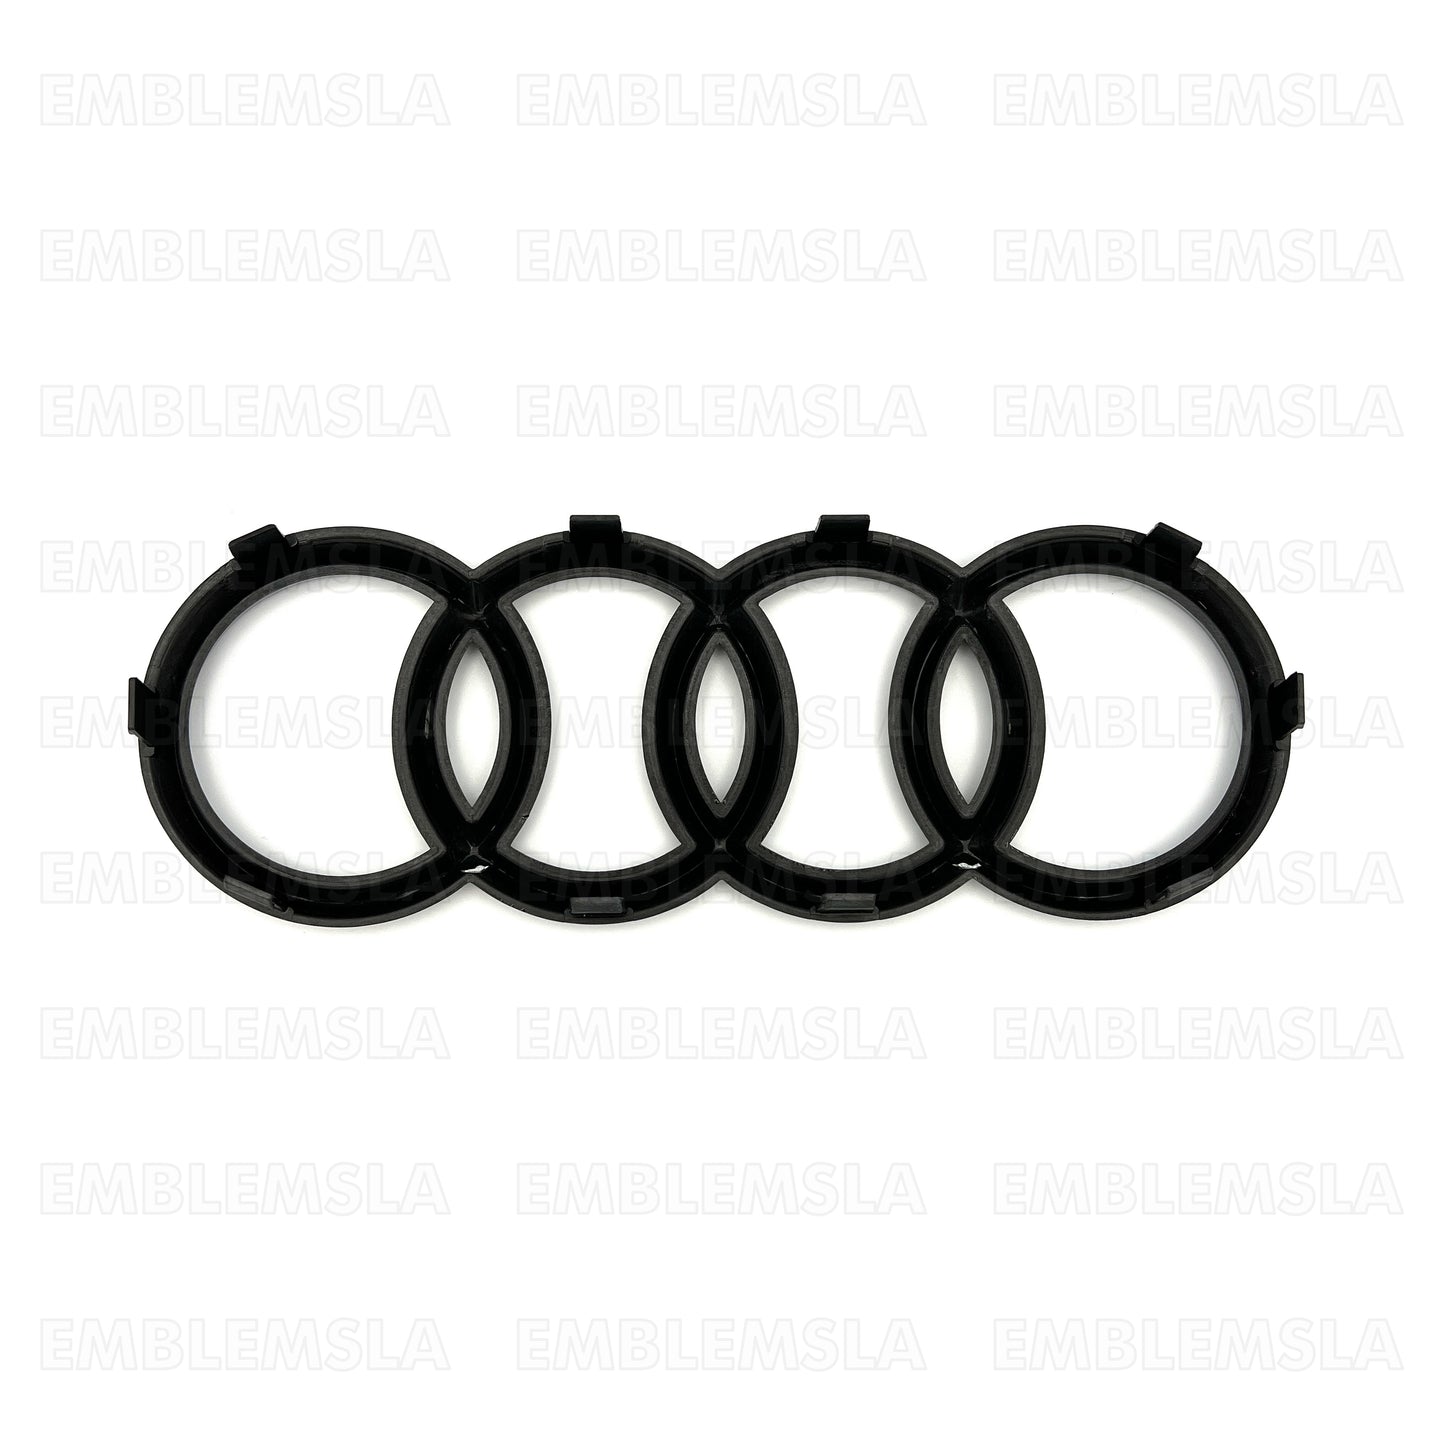 Audi Rings Front Grille Hood Emblem Gloss Black Badge A1 A3 A4 S4 A5 S5 A6 S6 TT 273mm